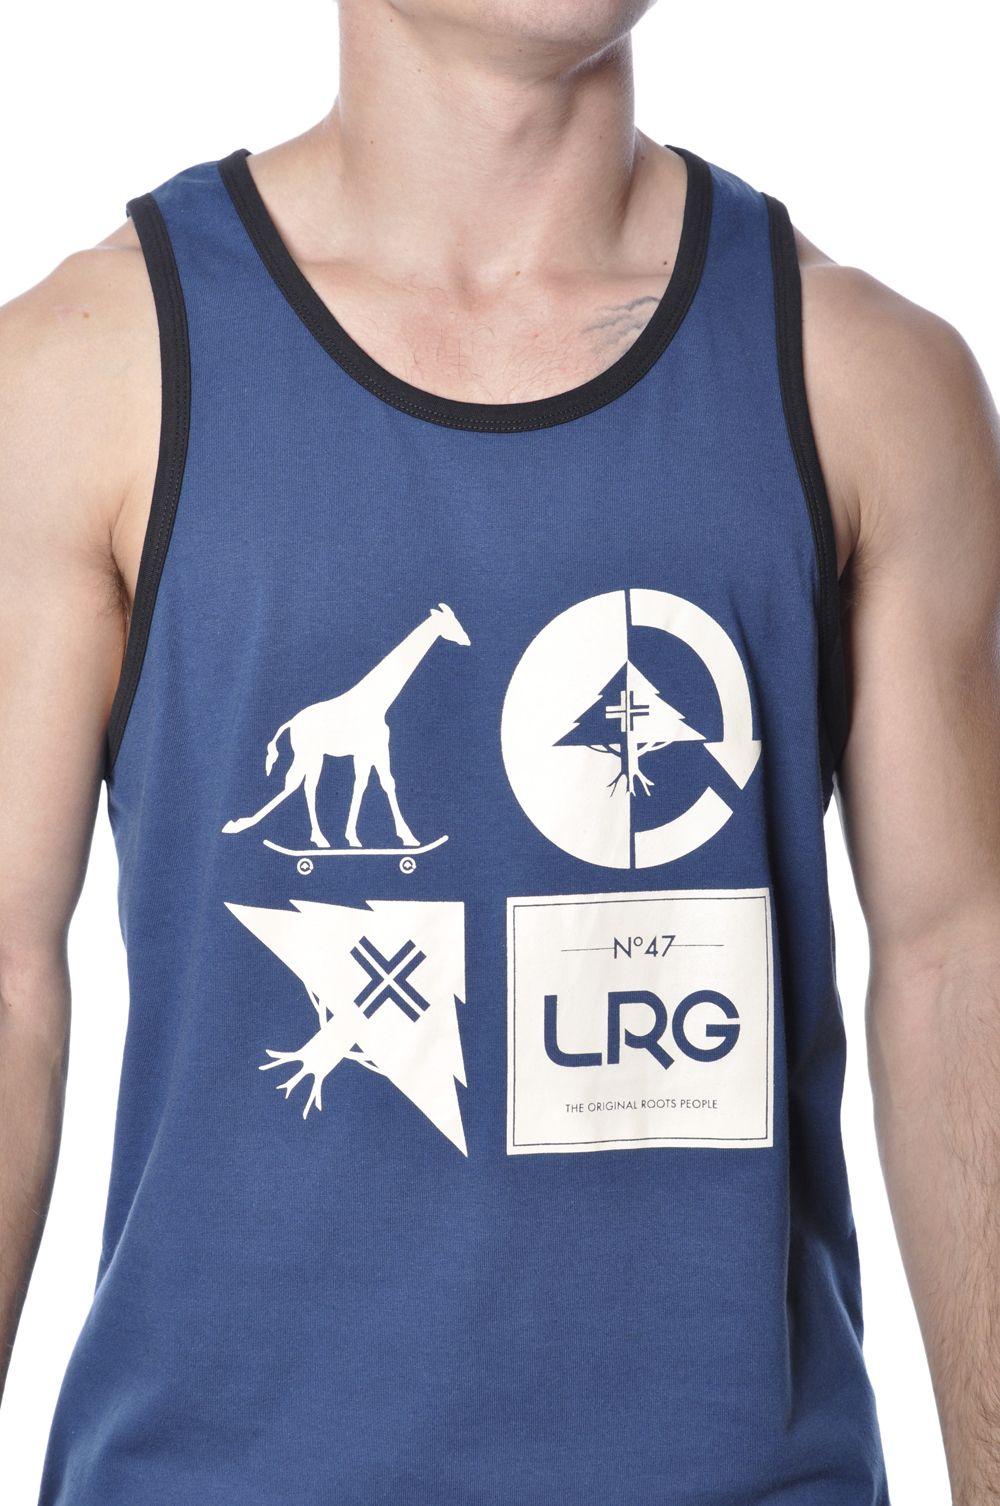 LRG Original Logo - LRG Mash Up Tank Top Shirt Mens Blue Lifted Research Group